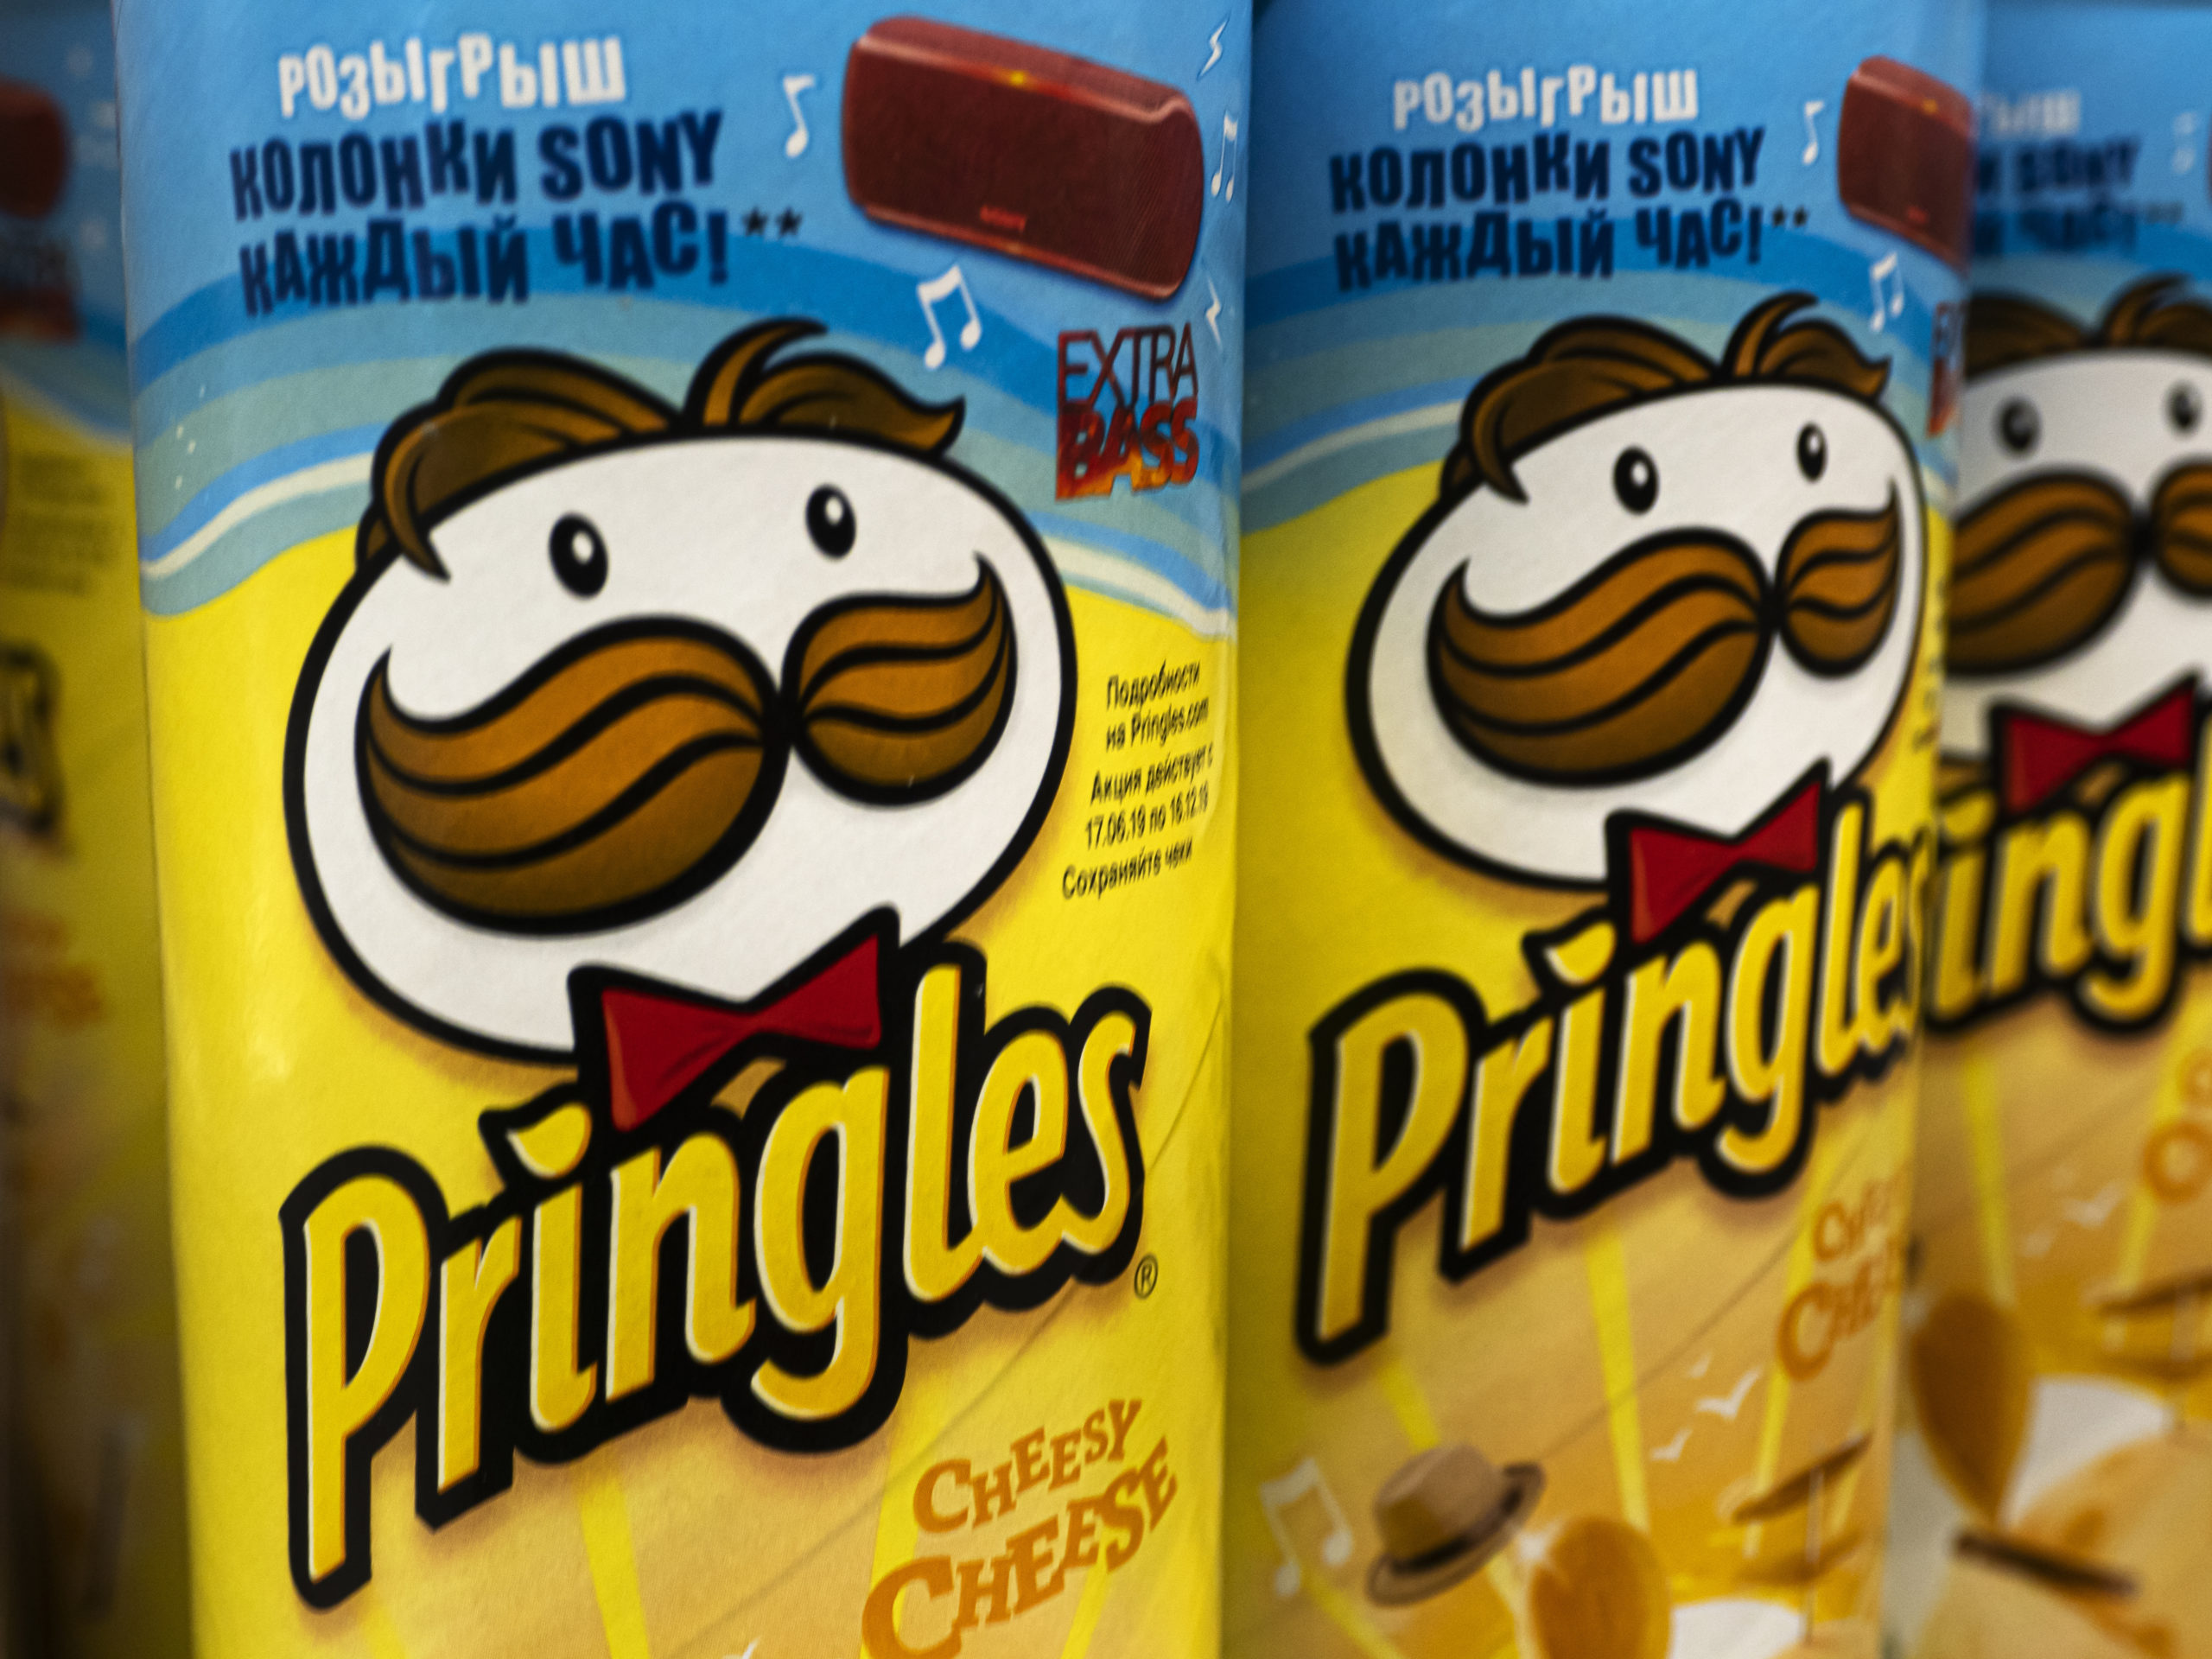 John Oliver's best Pringles Man body drawings: "He single, he Pringle" and more